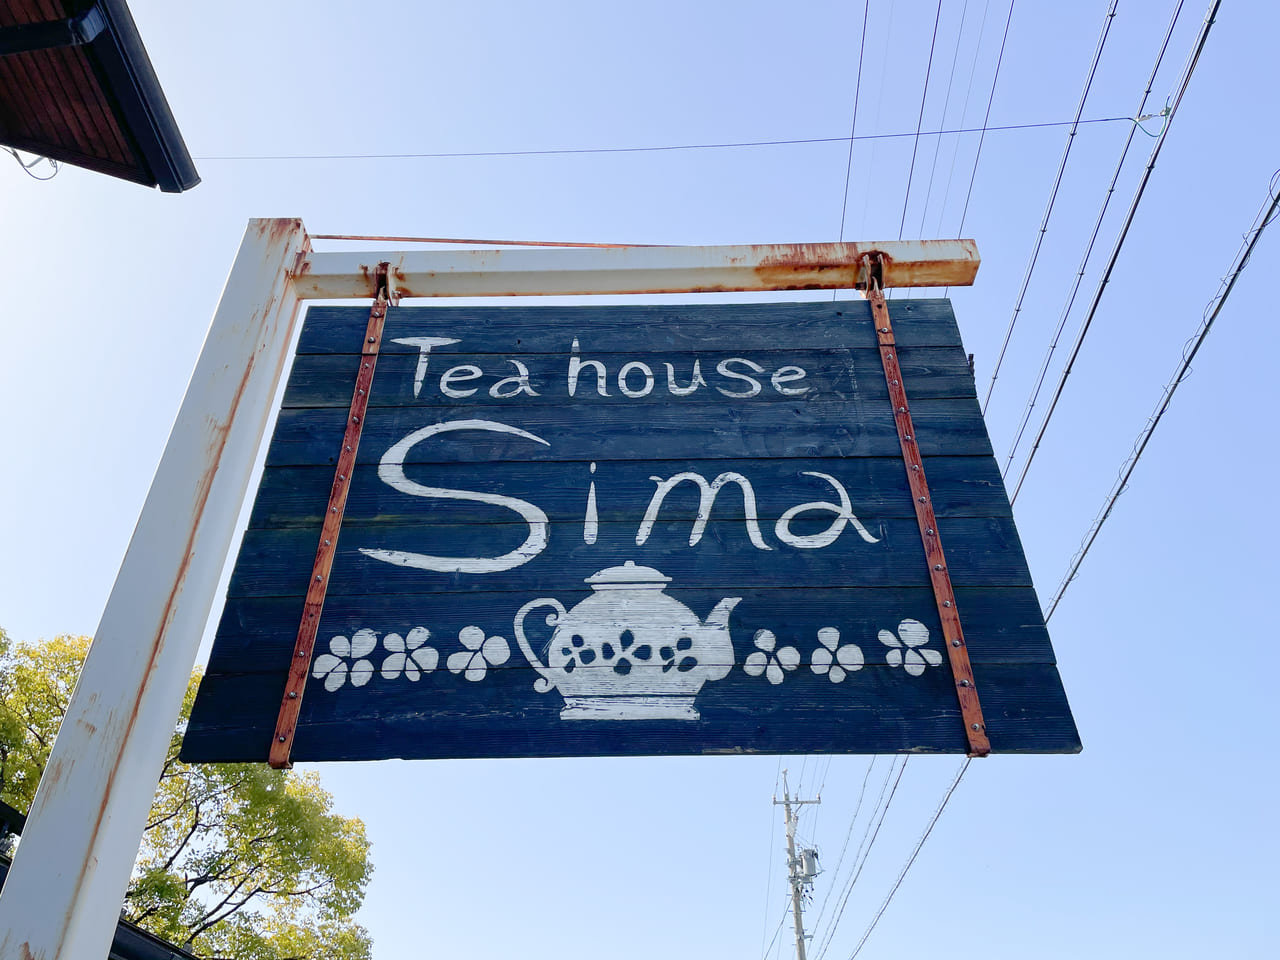 Tea house Sima